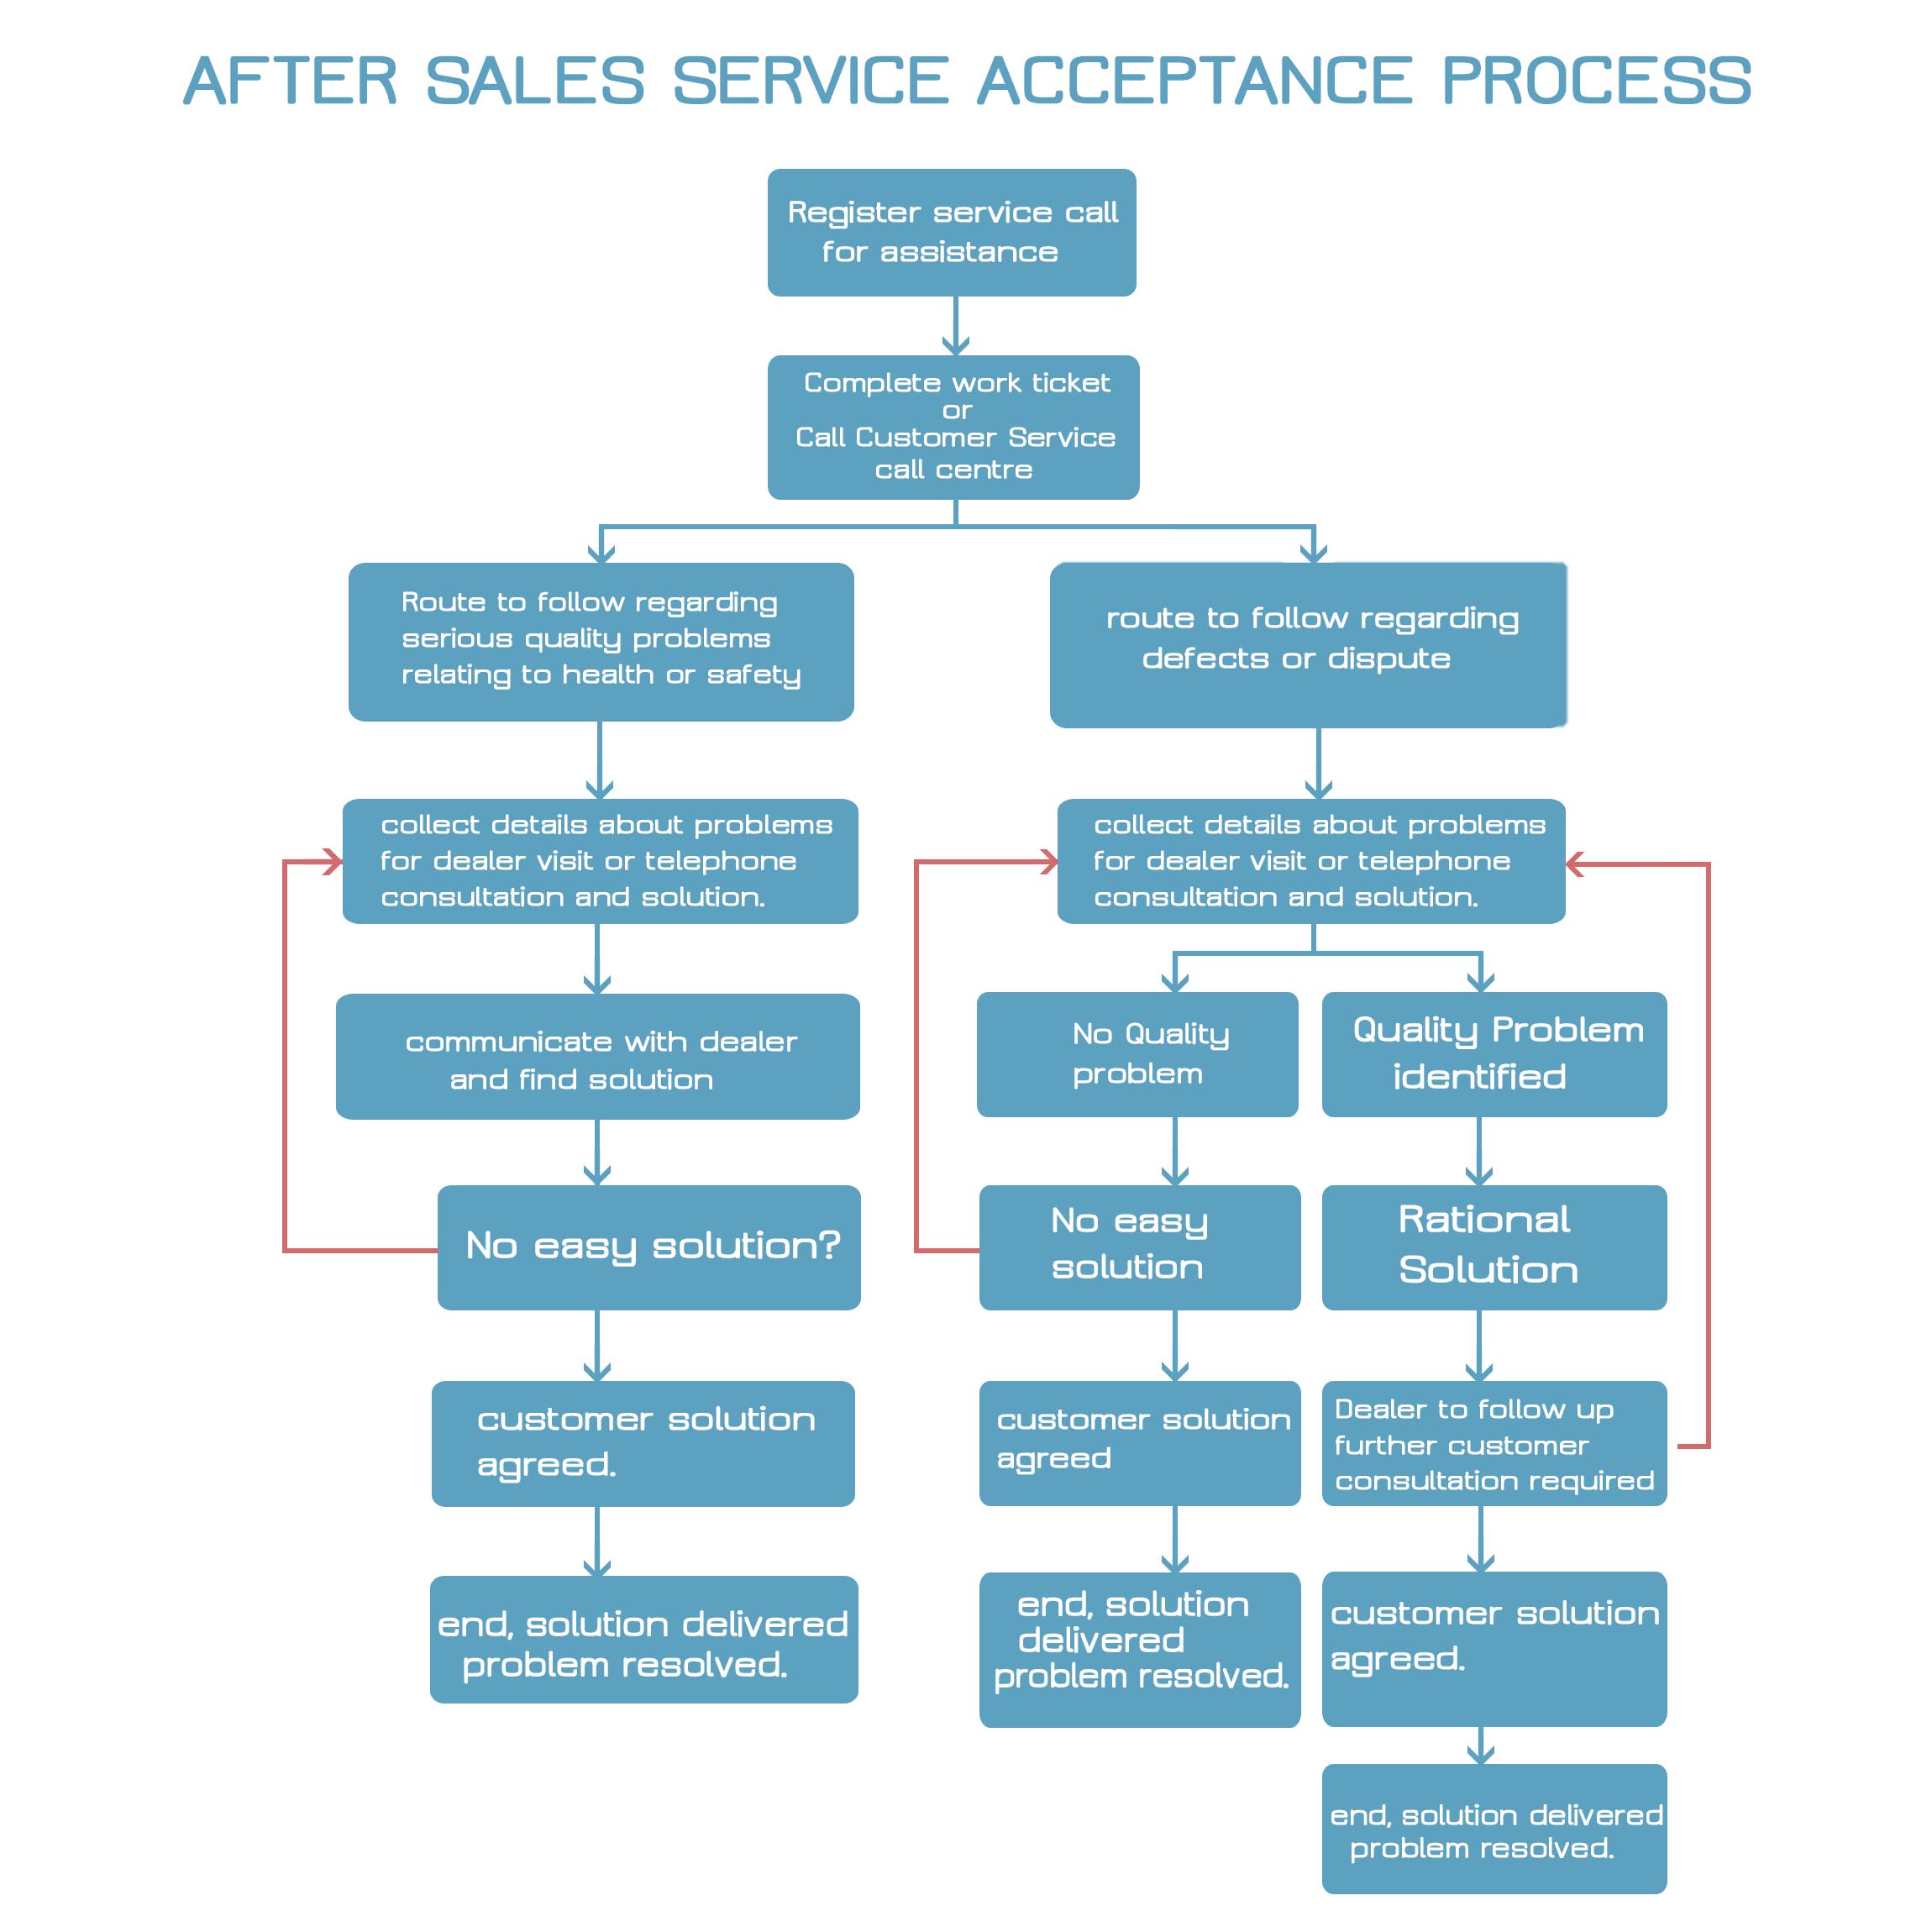 Sale service acceptance process